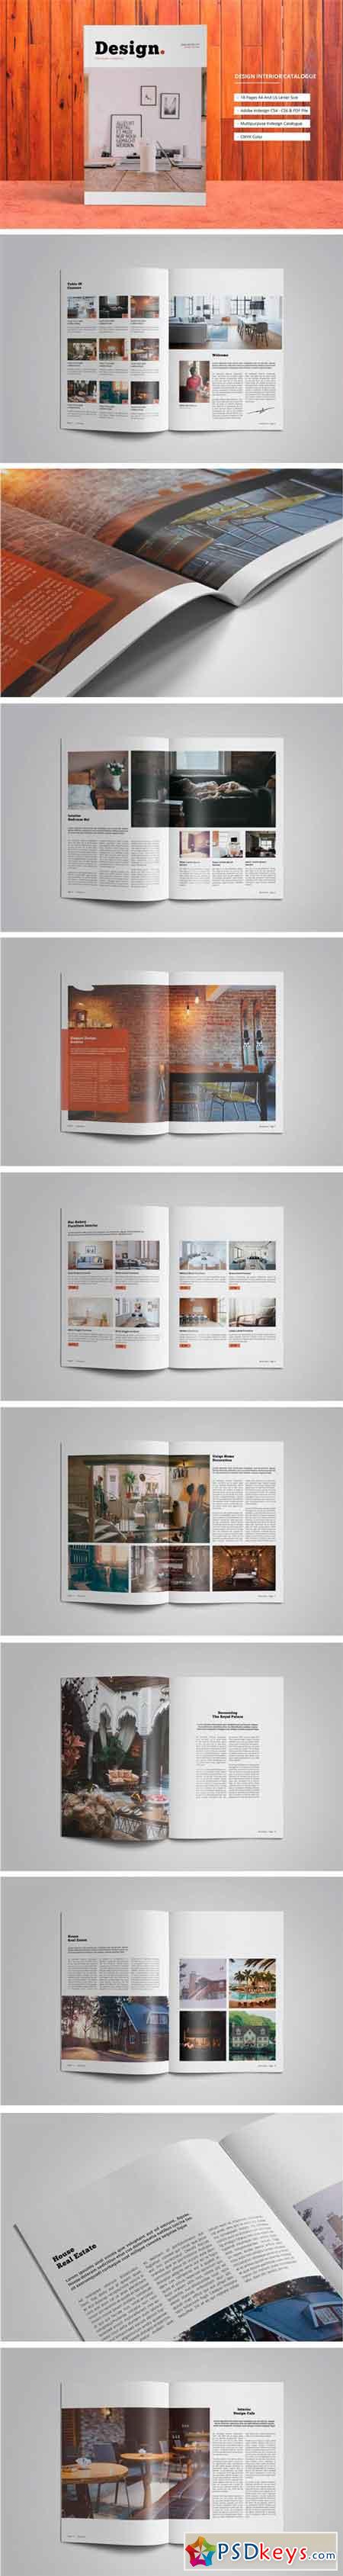 Design Interior Catalogue 1236872